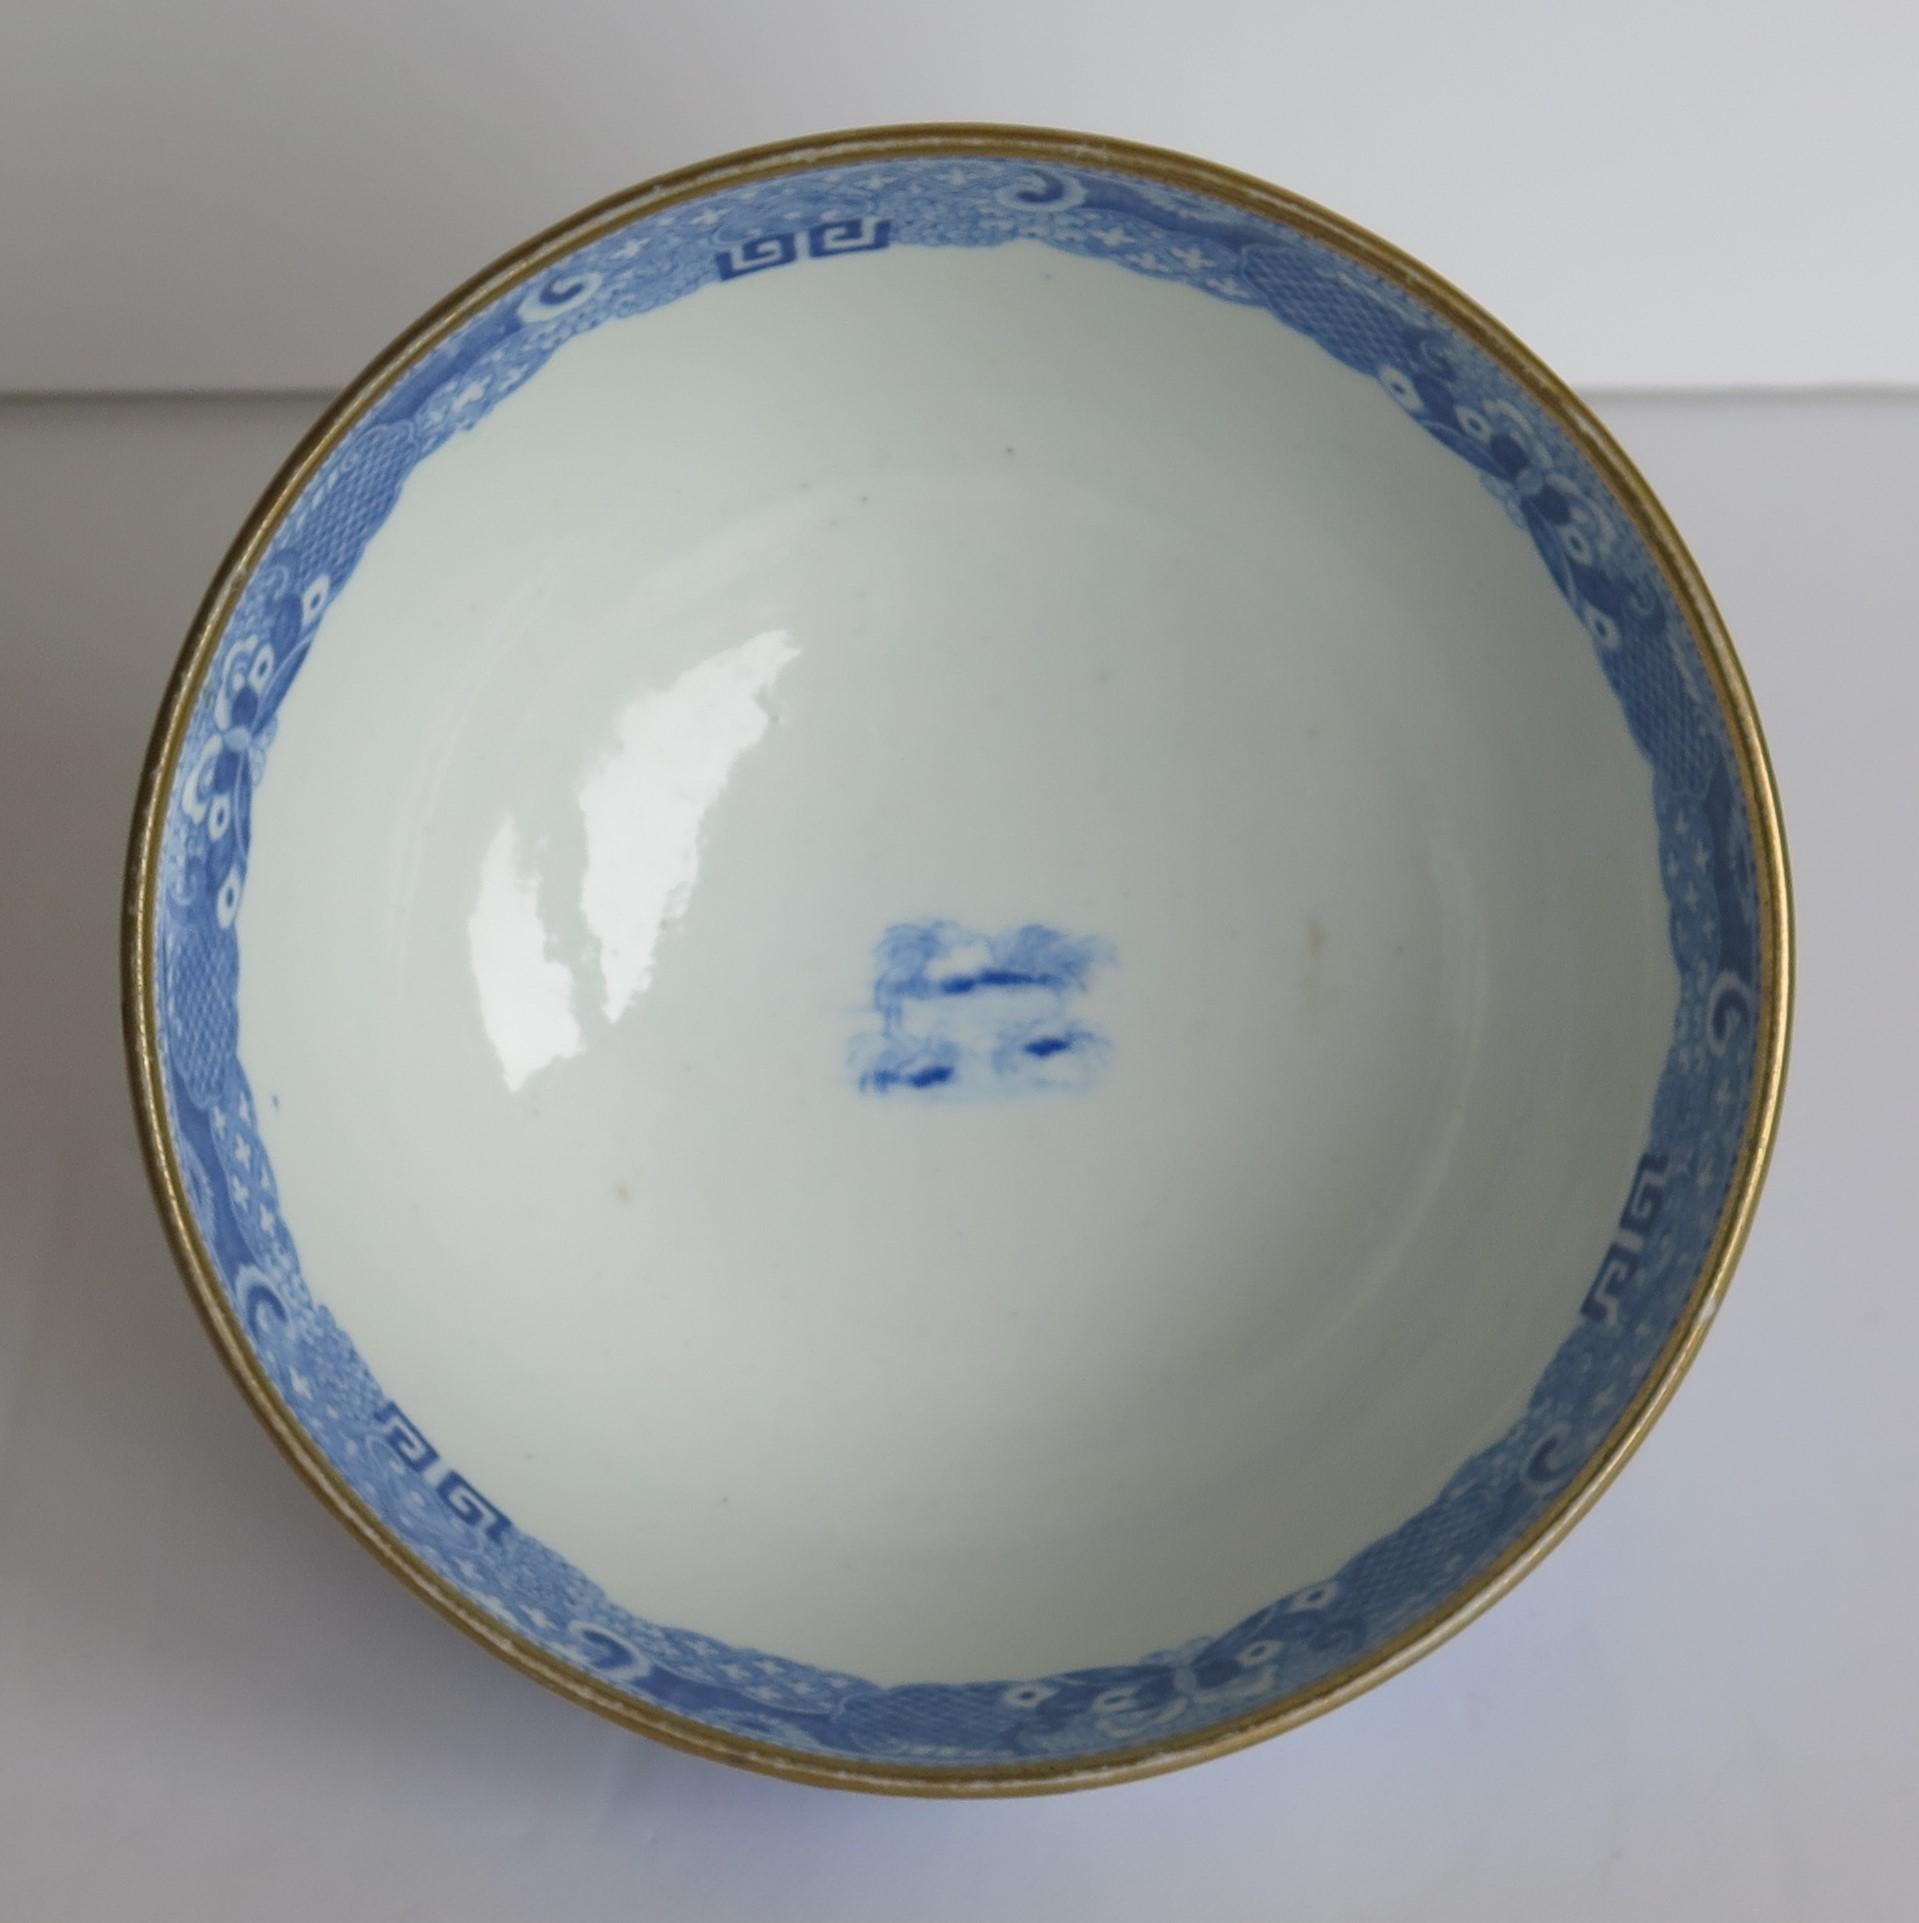 Miles Mason Porcelain Bowl Blue and White Broseley Pattern, English, circa 1805 5